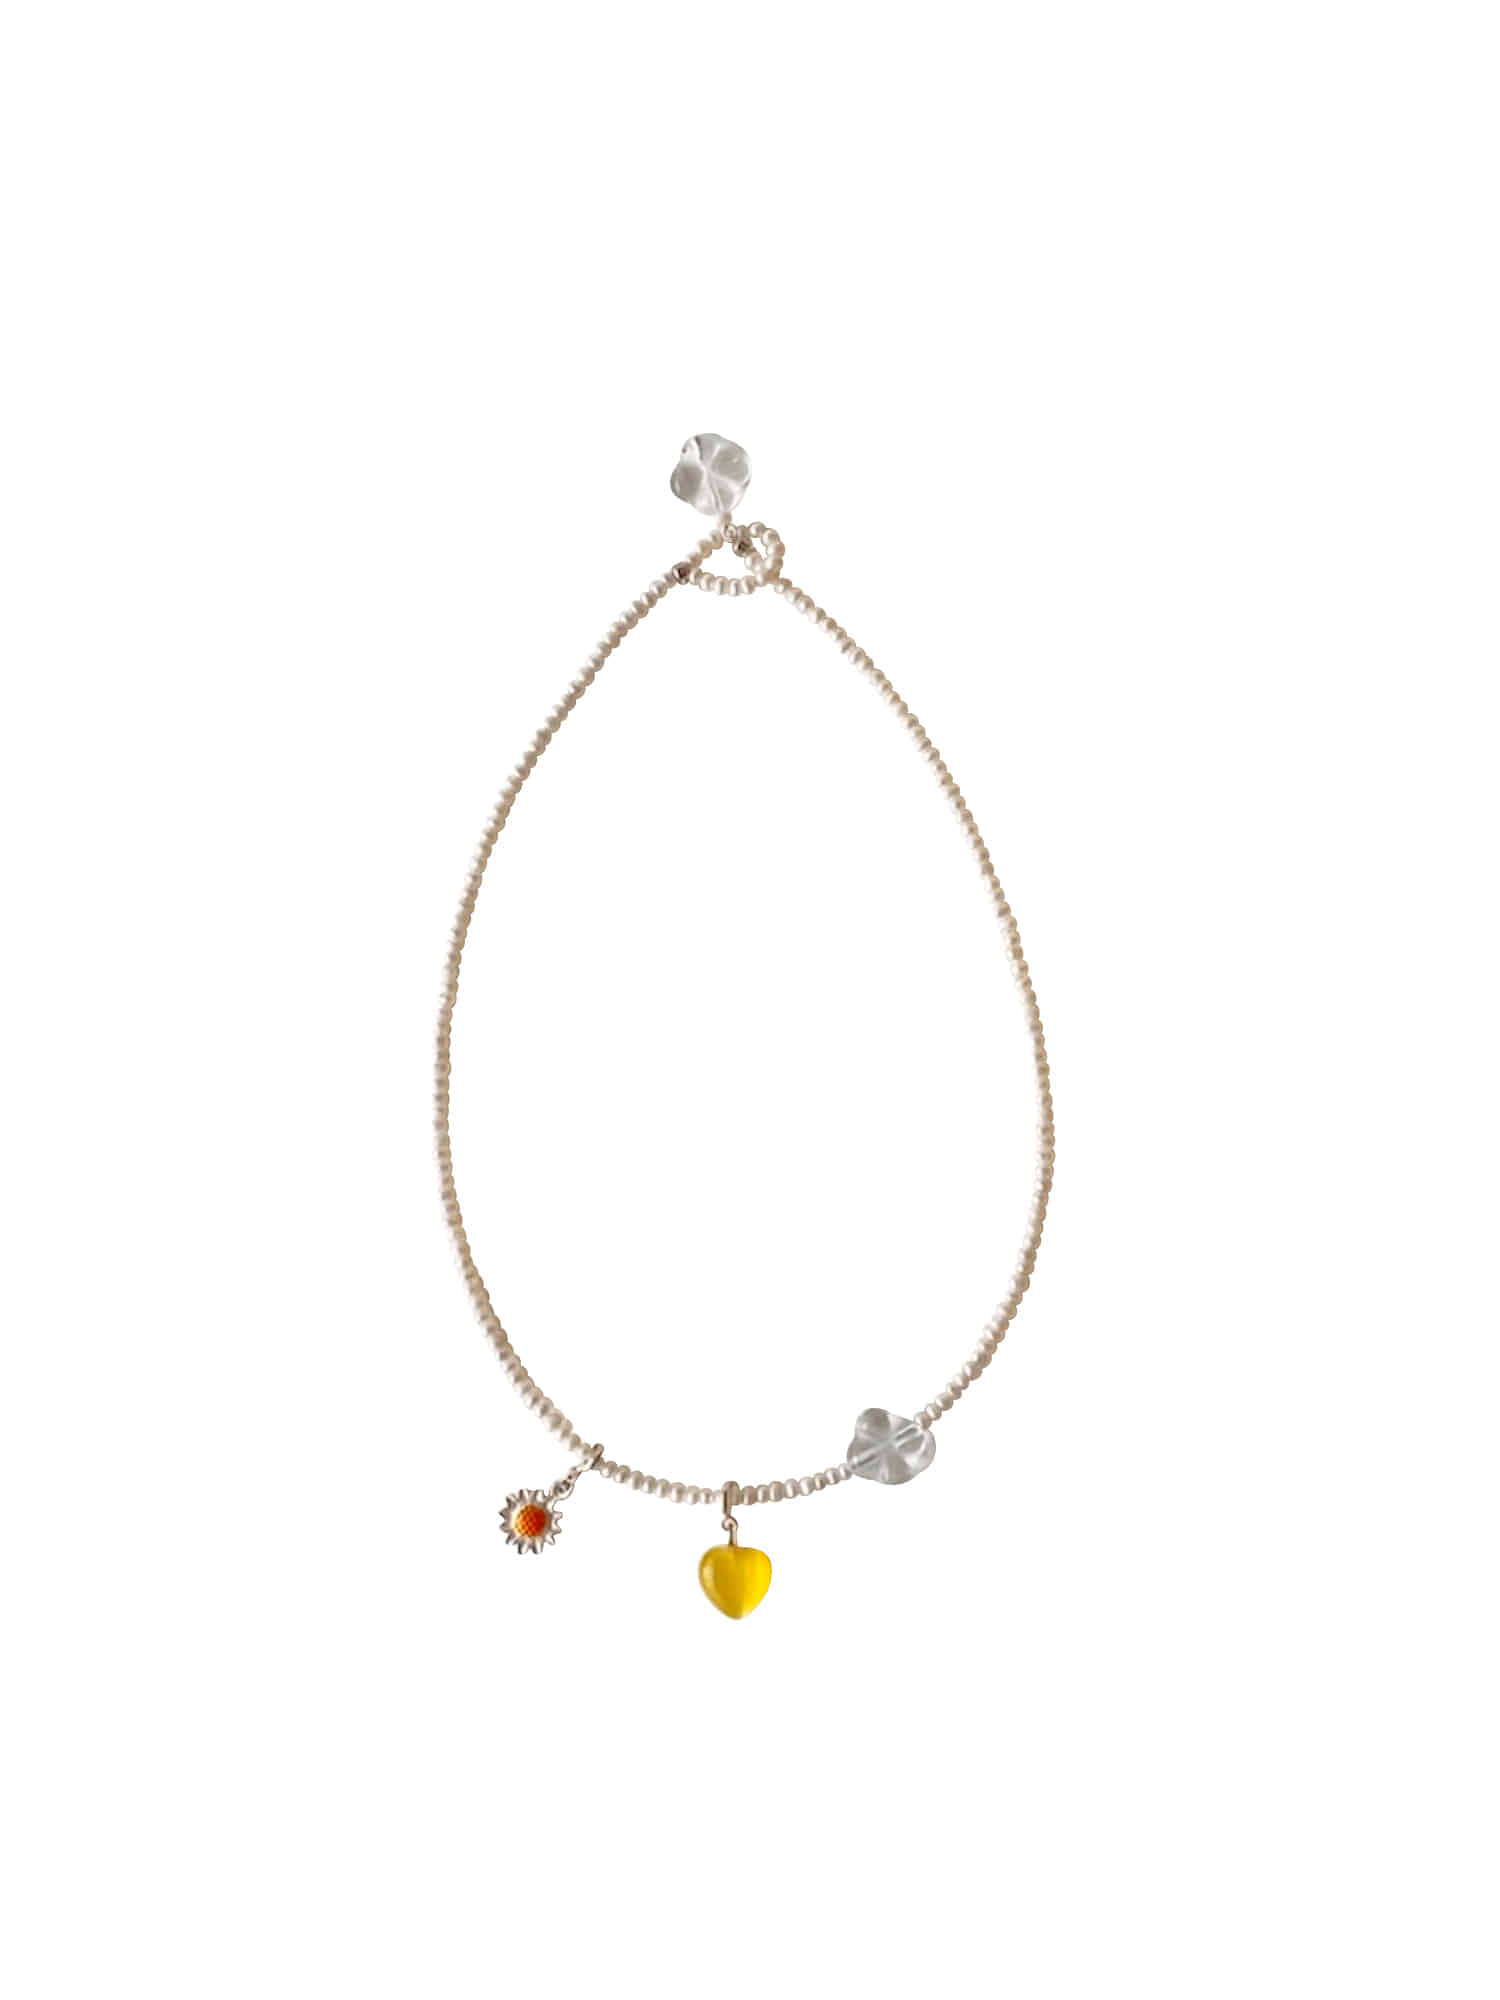 Sunflower Heart Necklace